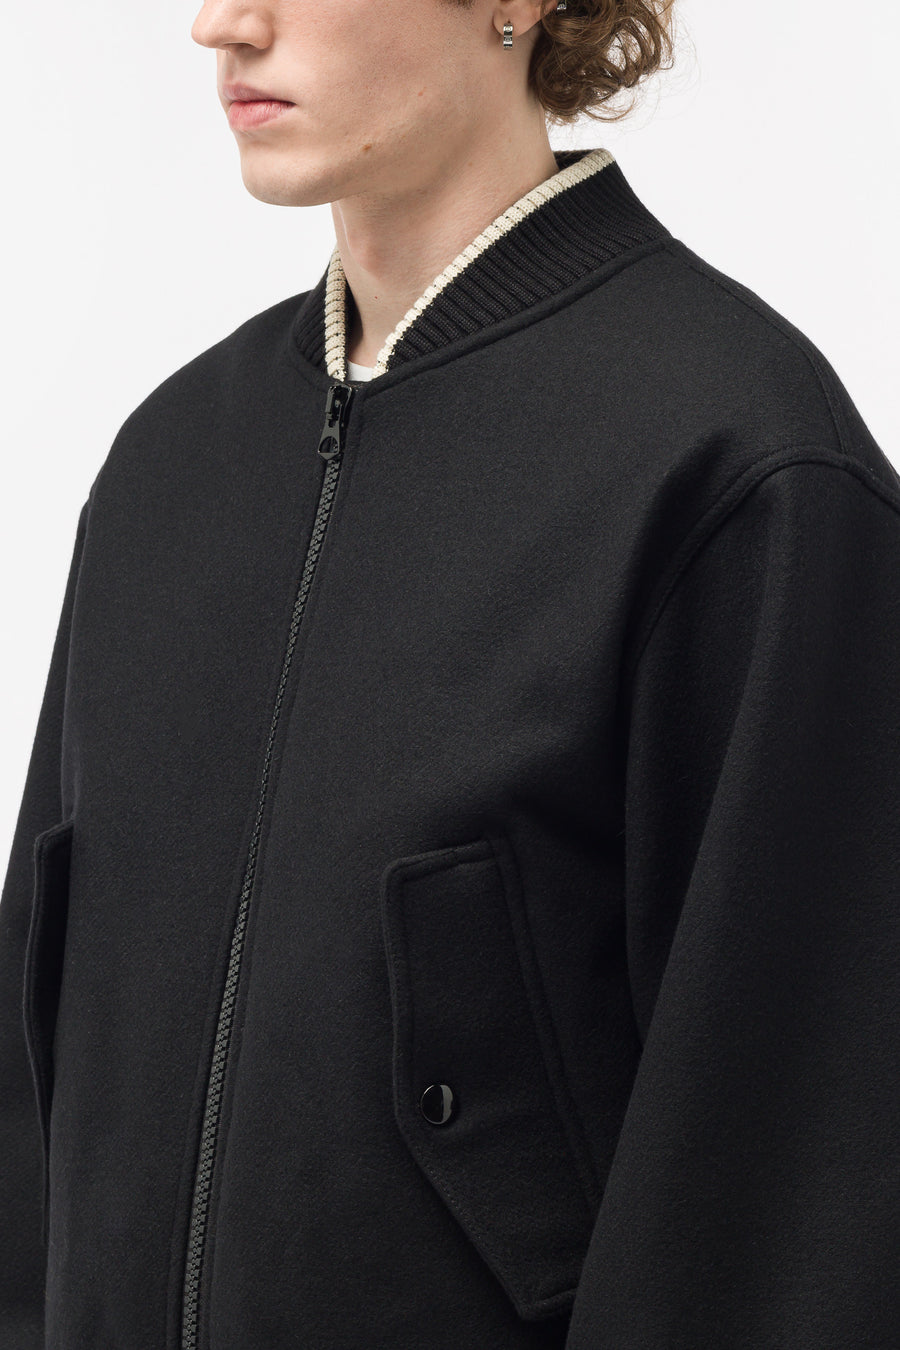 Vellow Jacket in Black